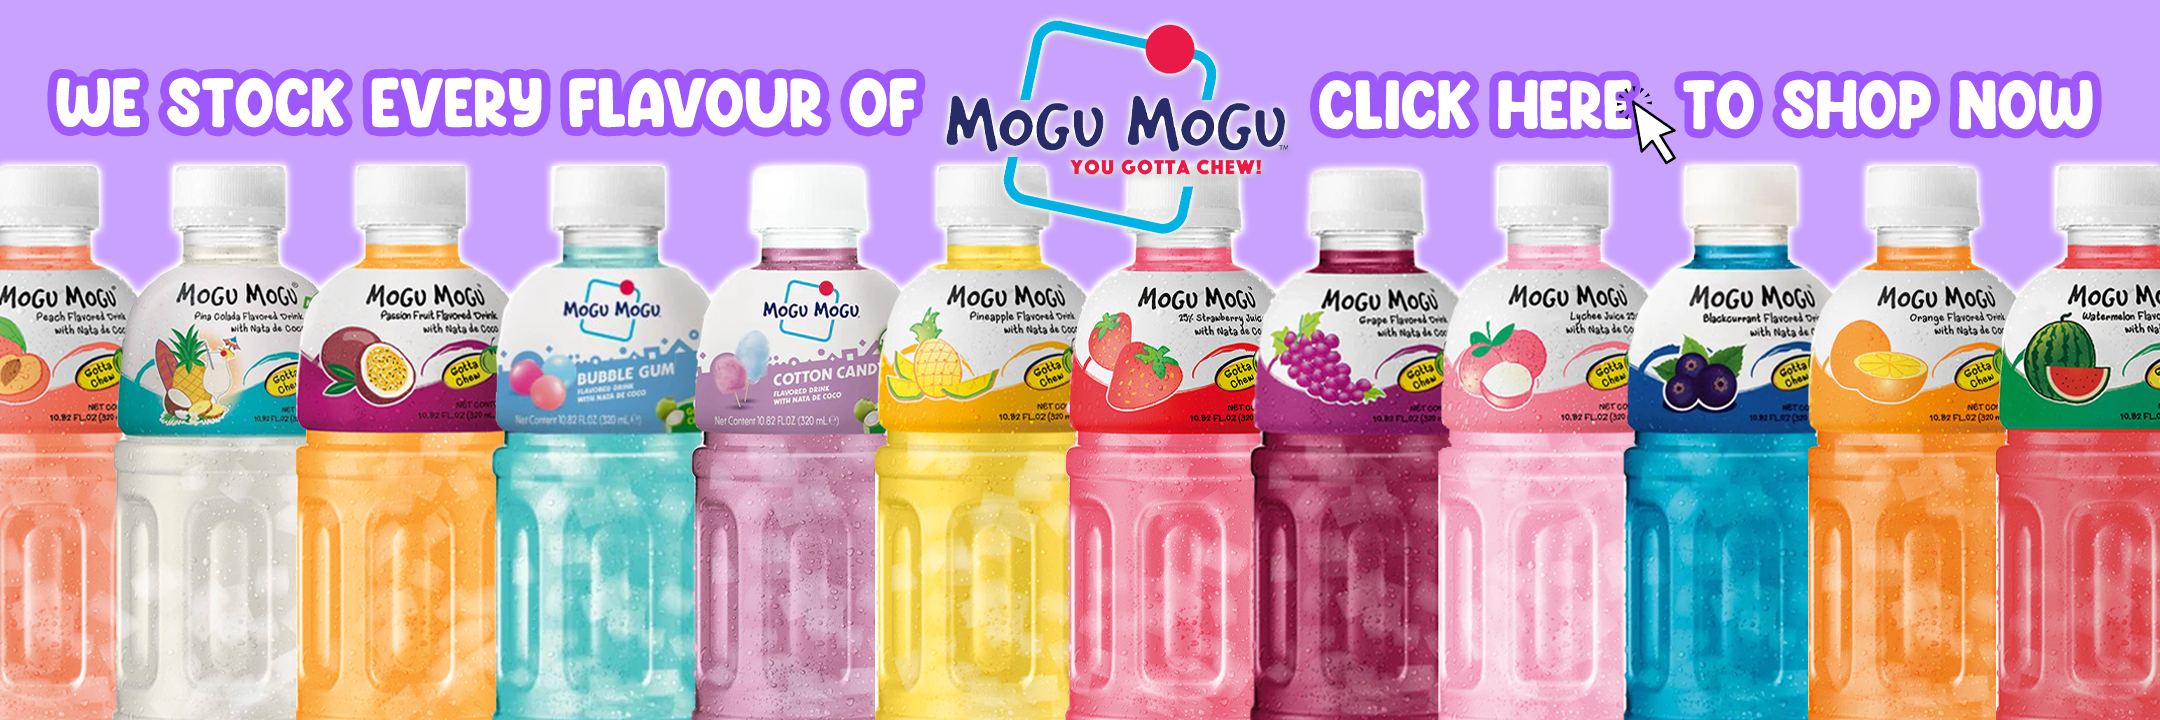 Mogu Mogu drinks with bubbles